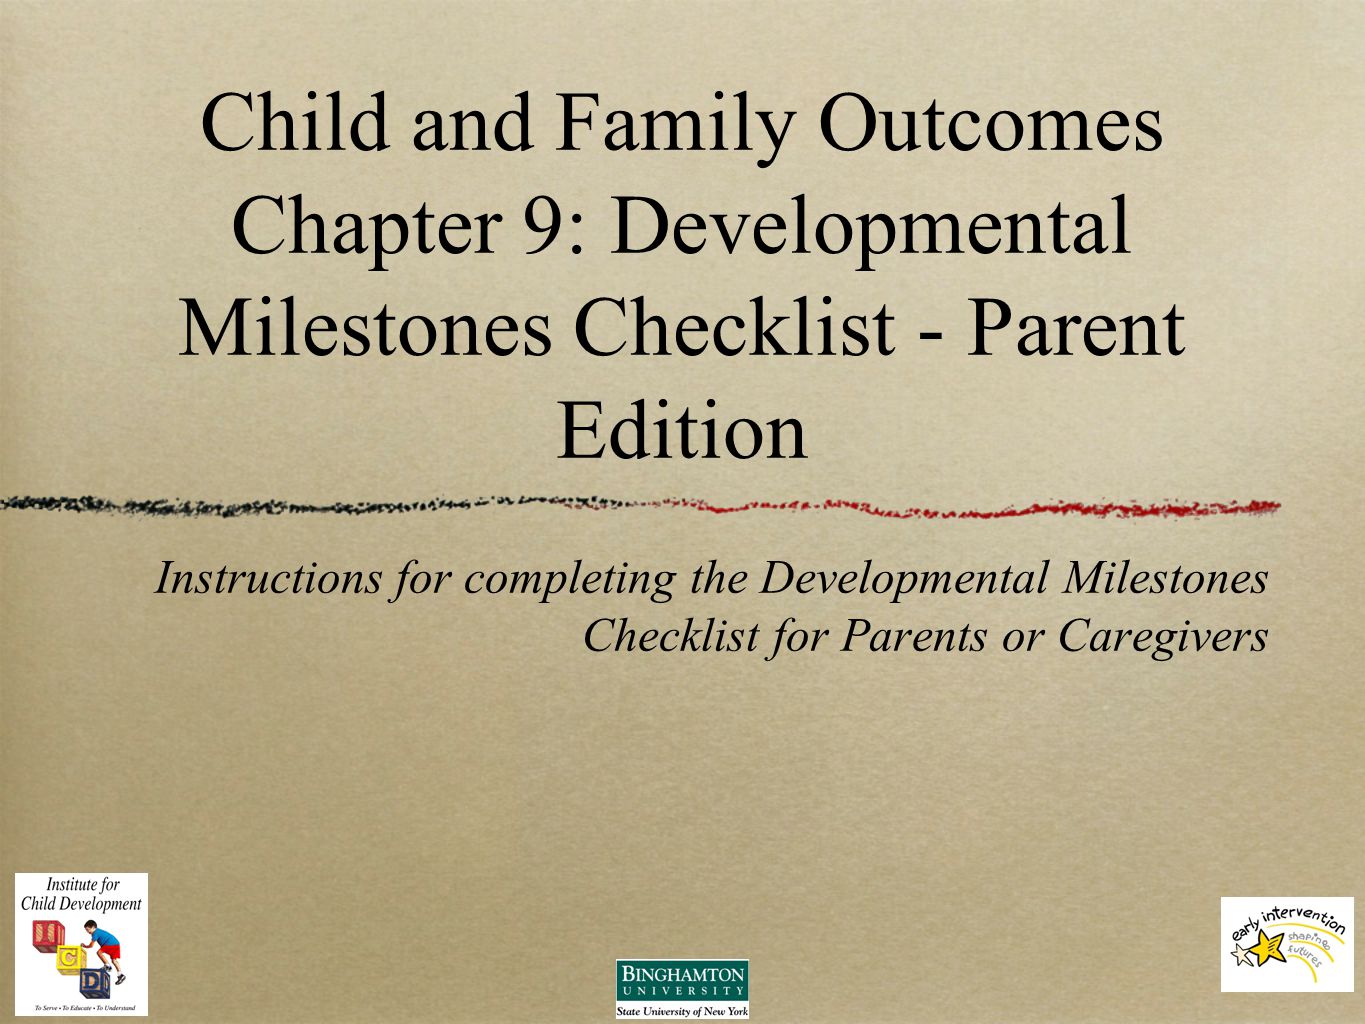 Child Developmental Milestones Chart